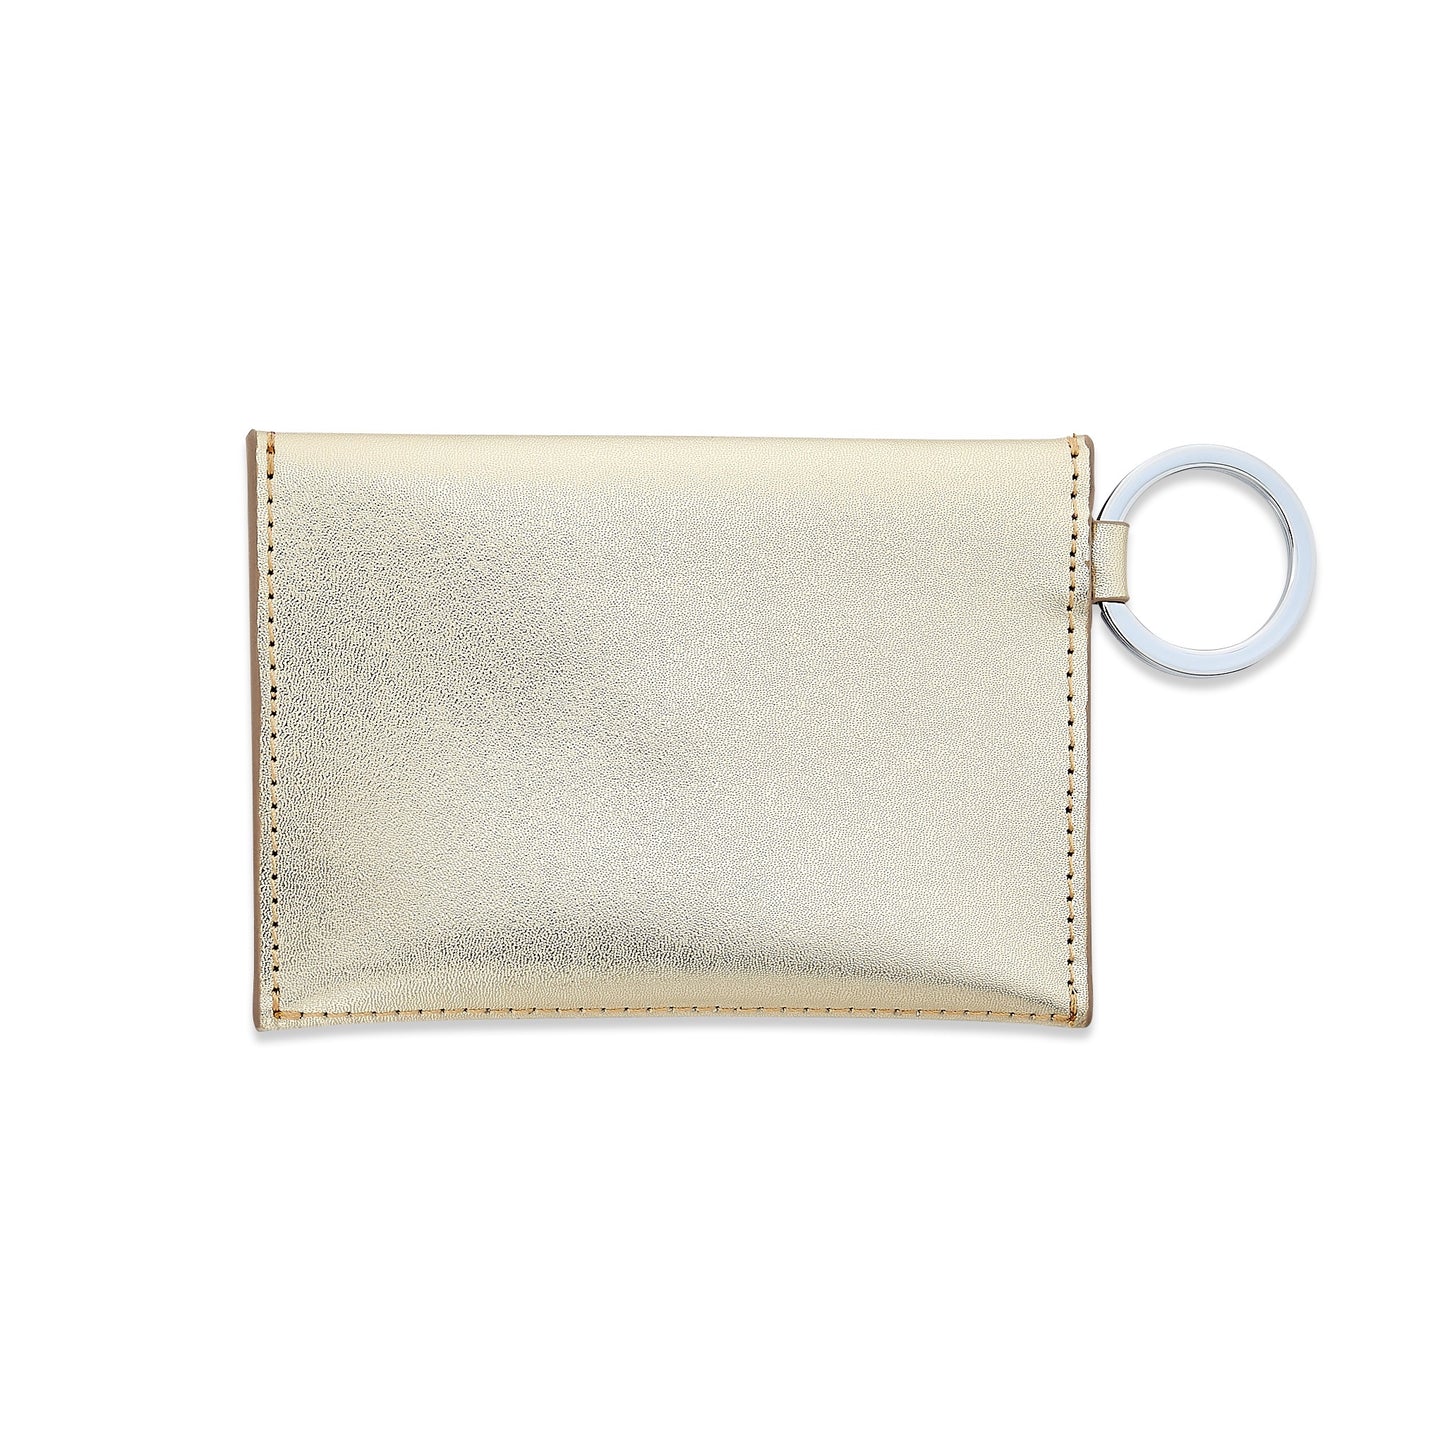 Stylish leather keychain wallet in mini envelope design shown backside